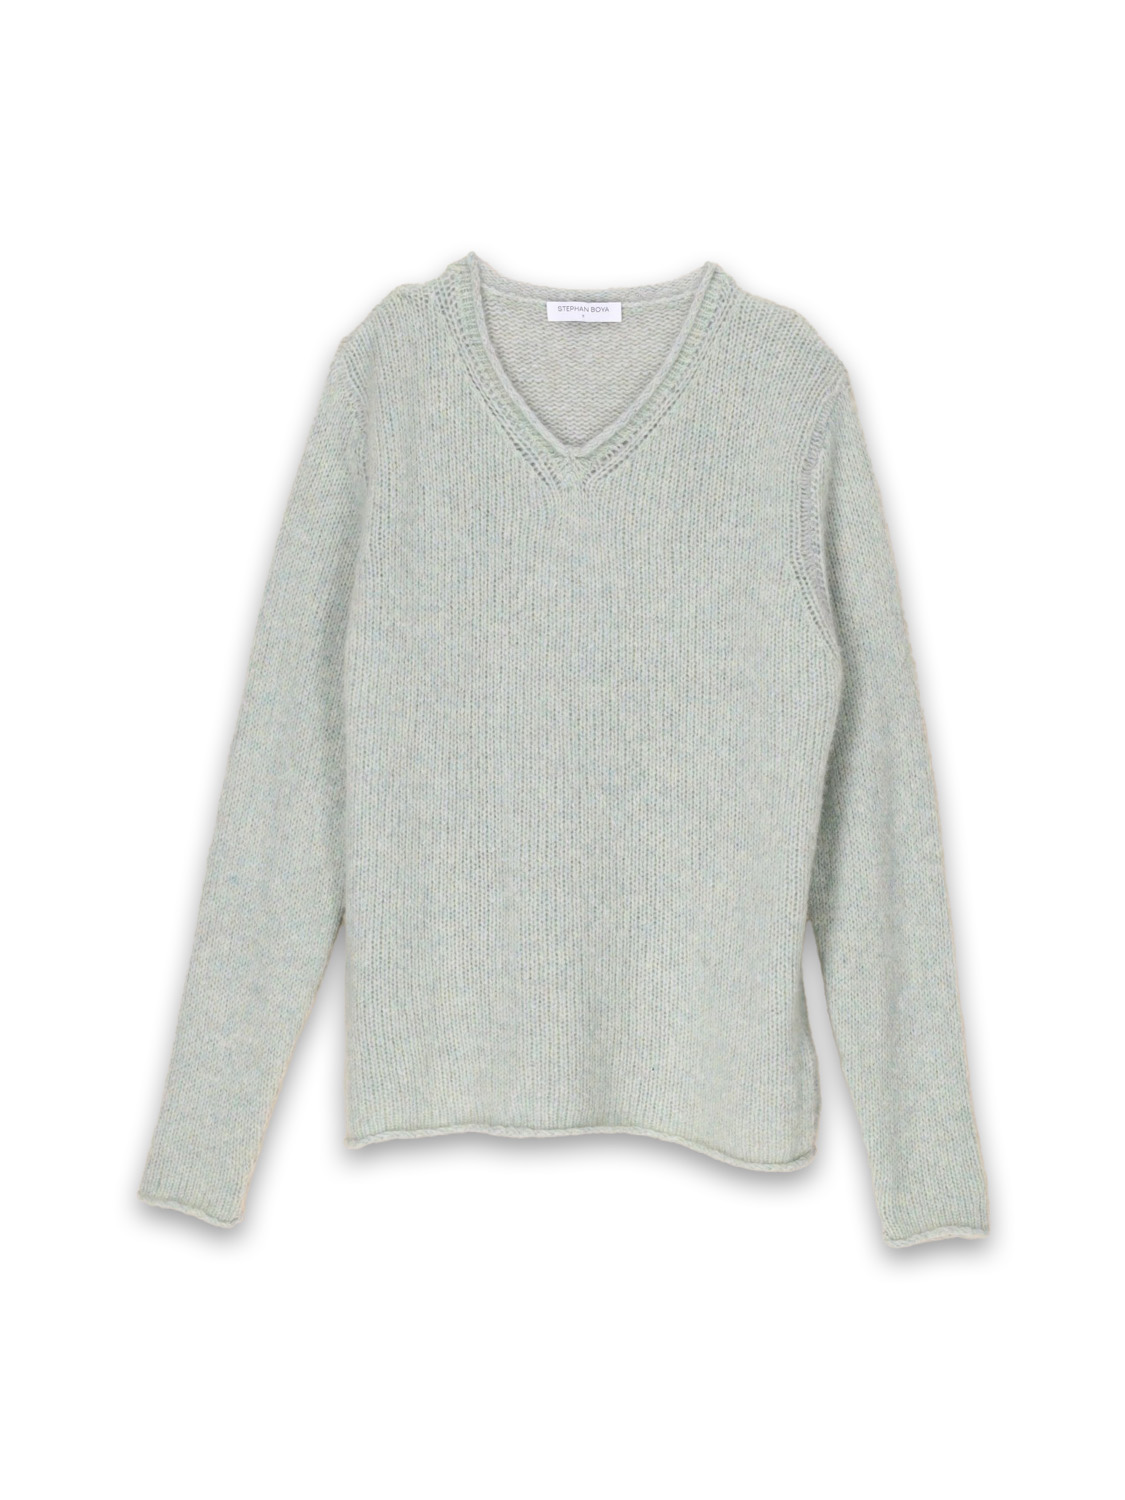 Boya Race - Lightweight knitted sweater in cashmere  